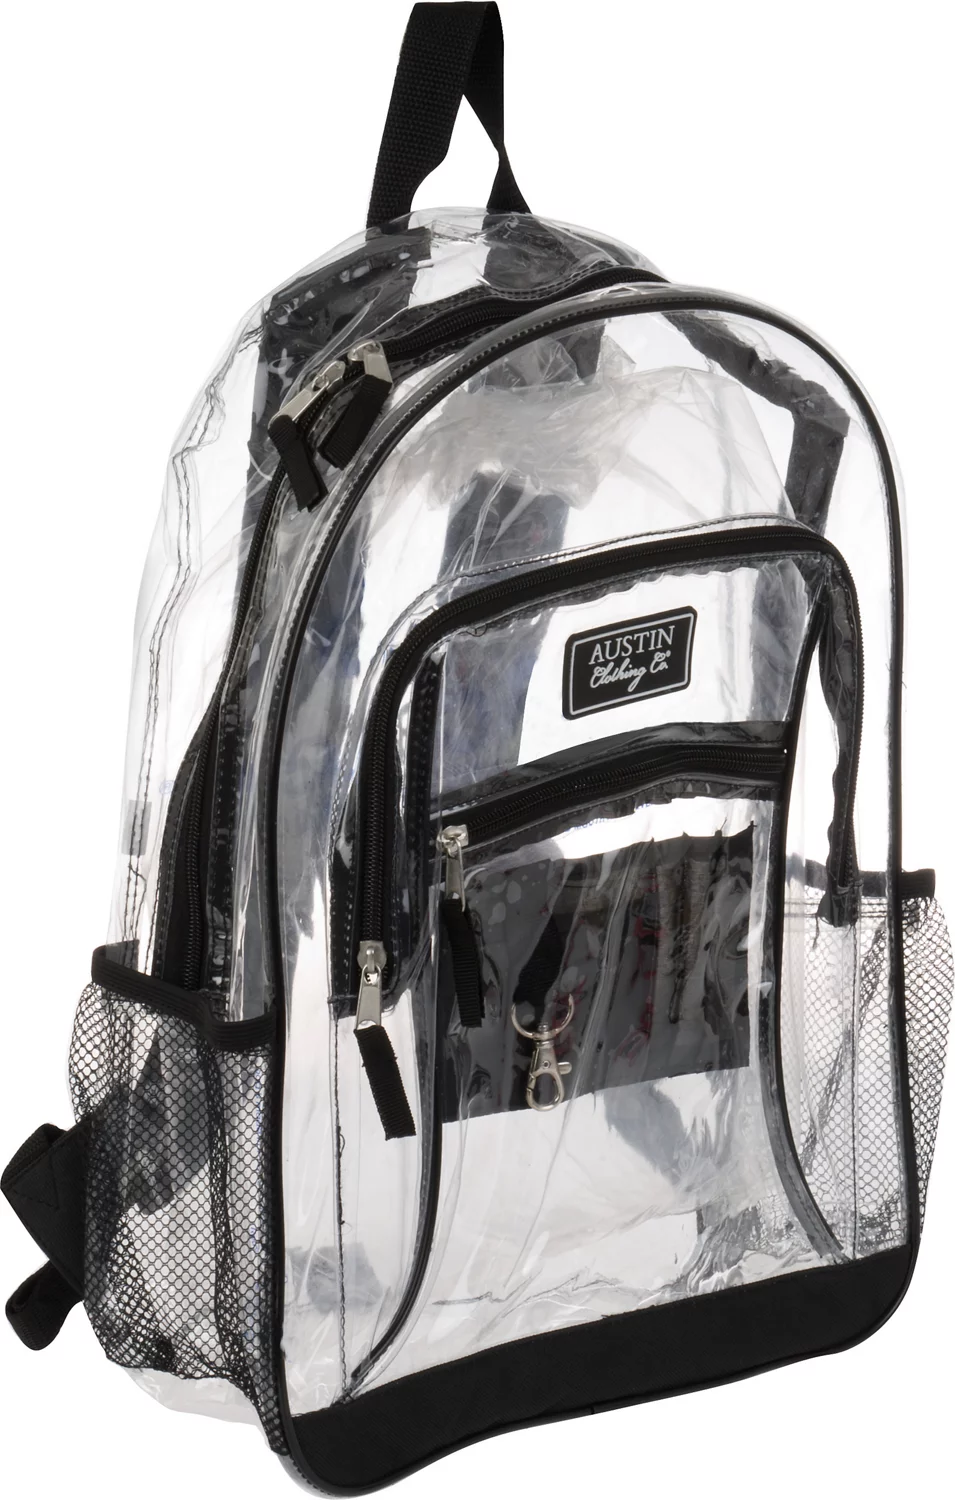 jansport backpack clear